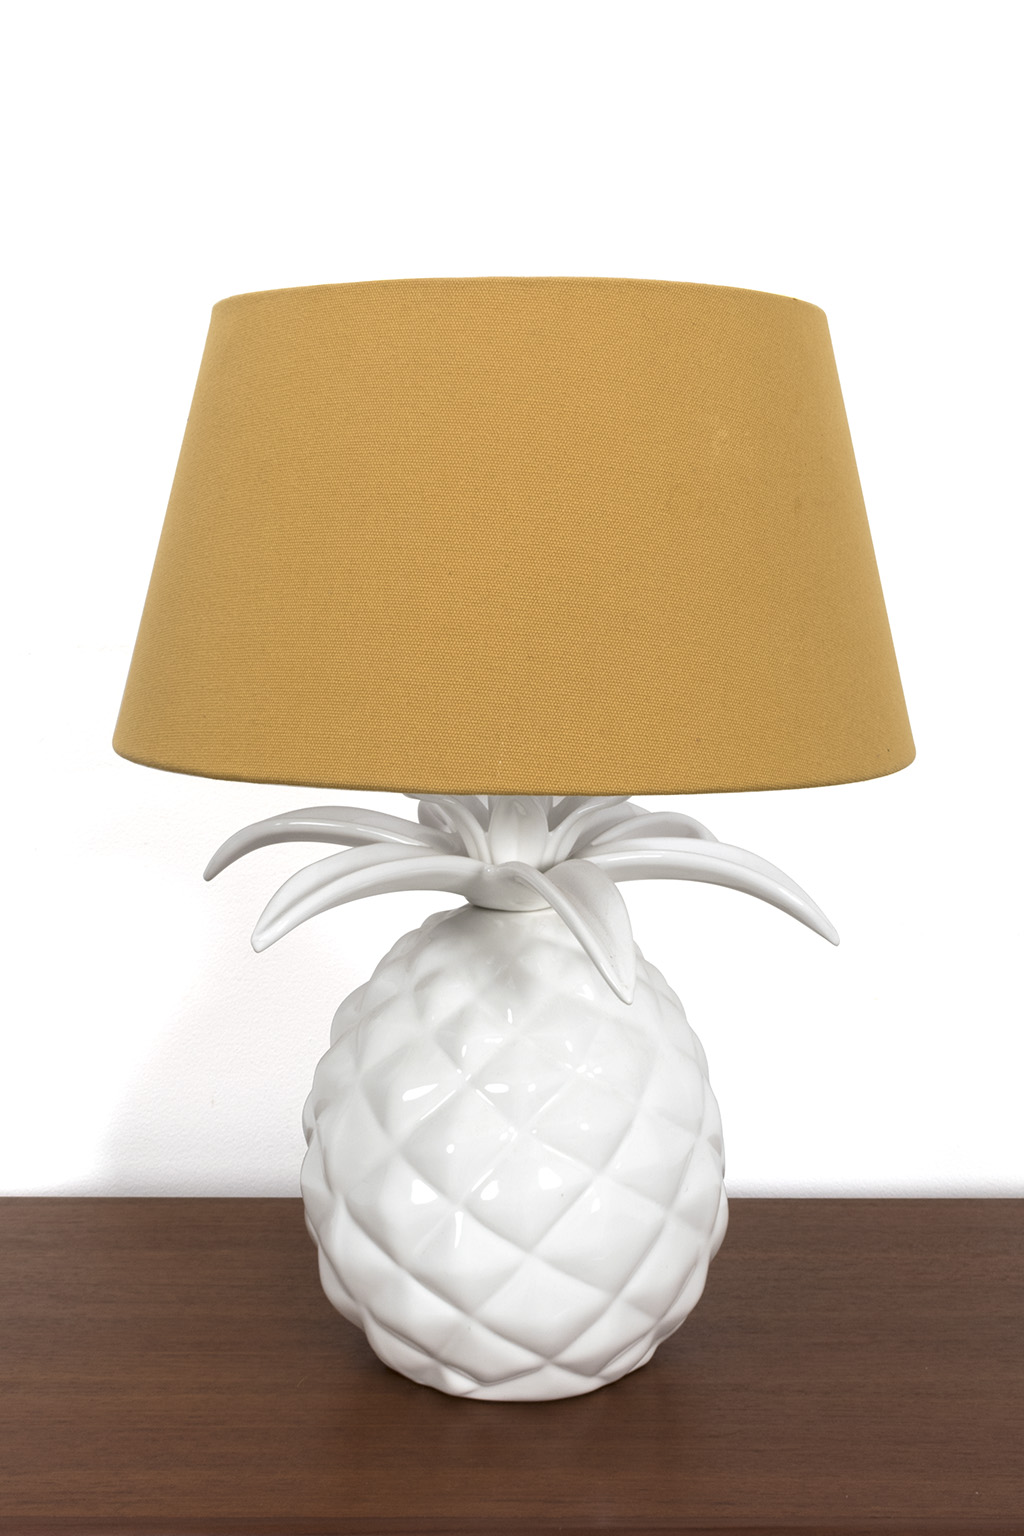 Vintage pineapple table lamp